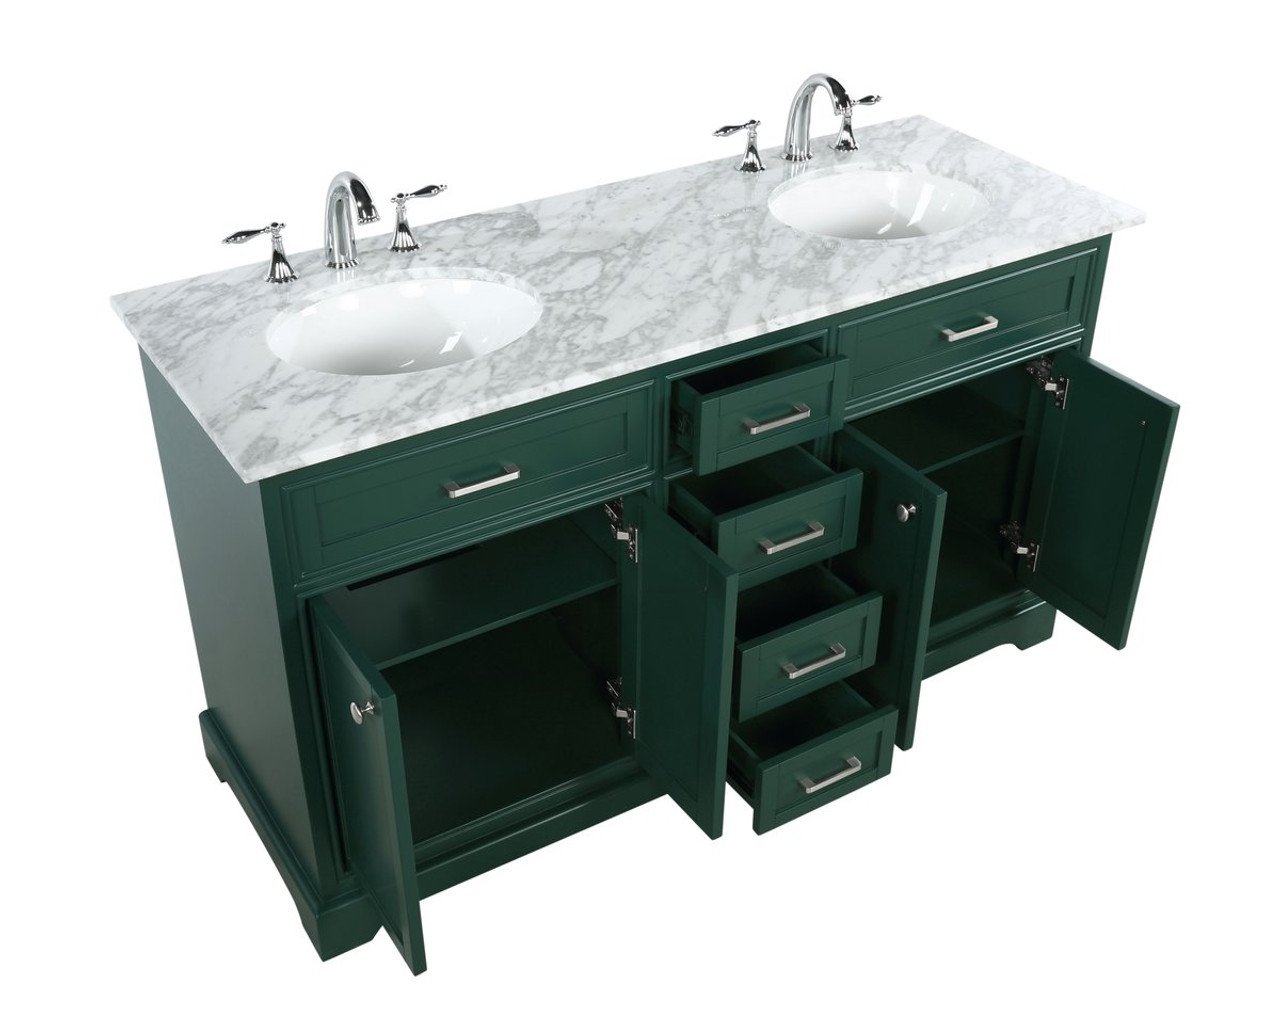 Elegant Decor VF15060DGN 60 inch single bathroom vanity in green